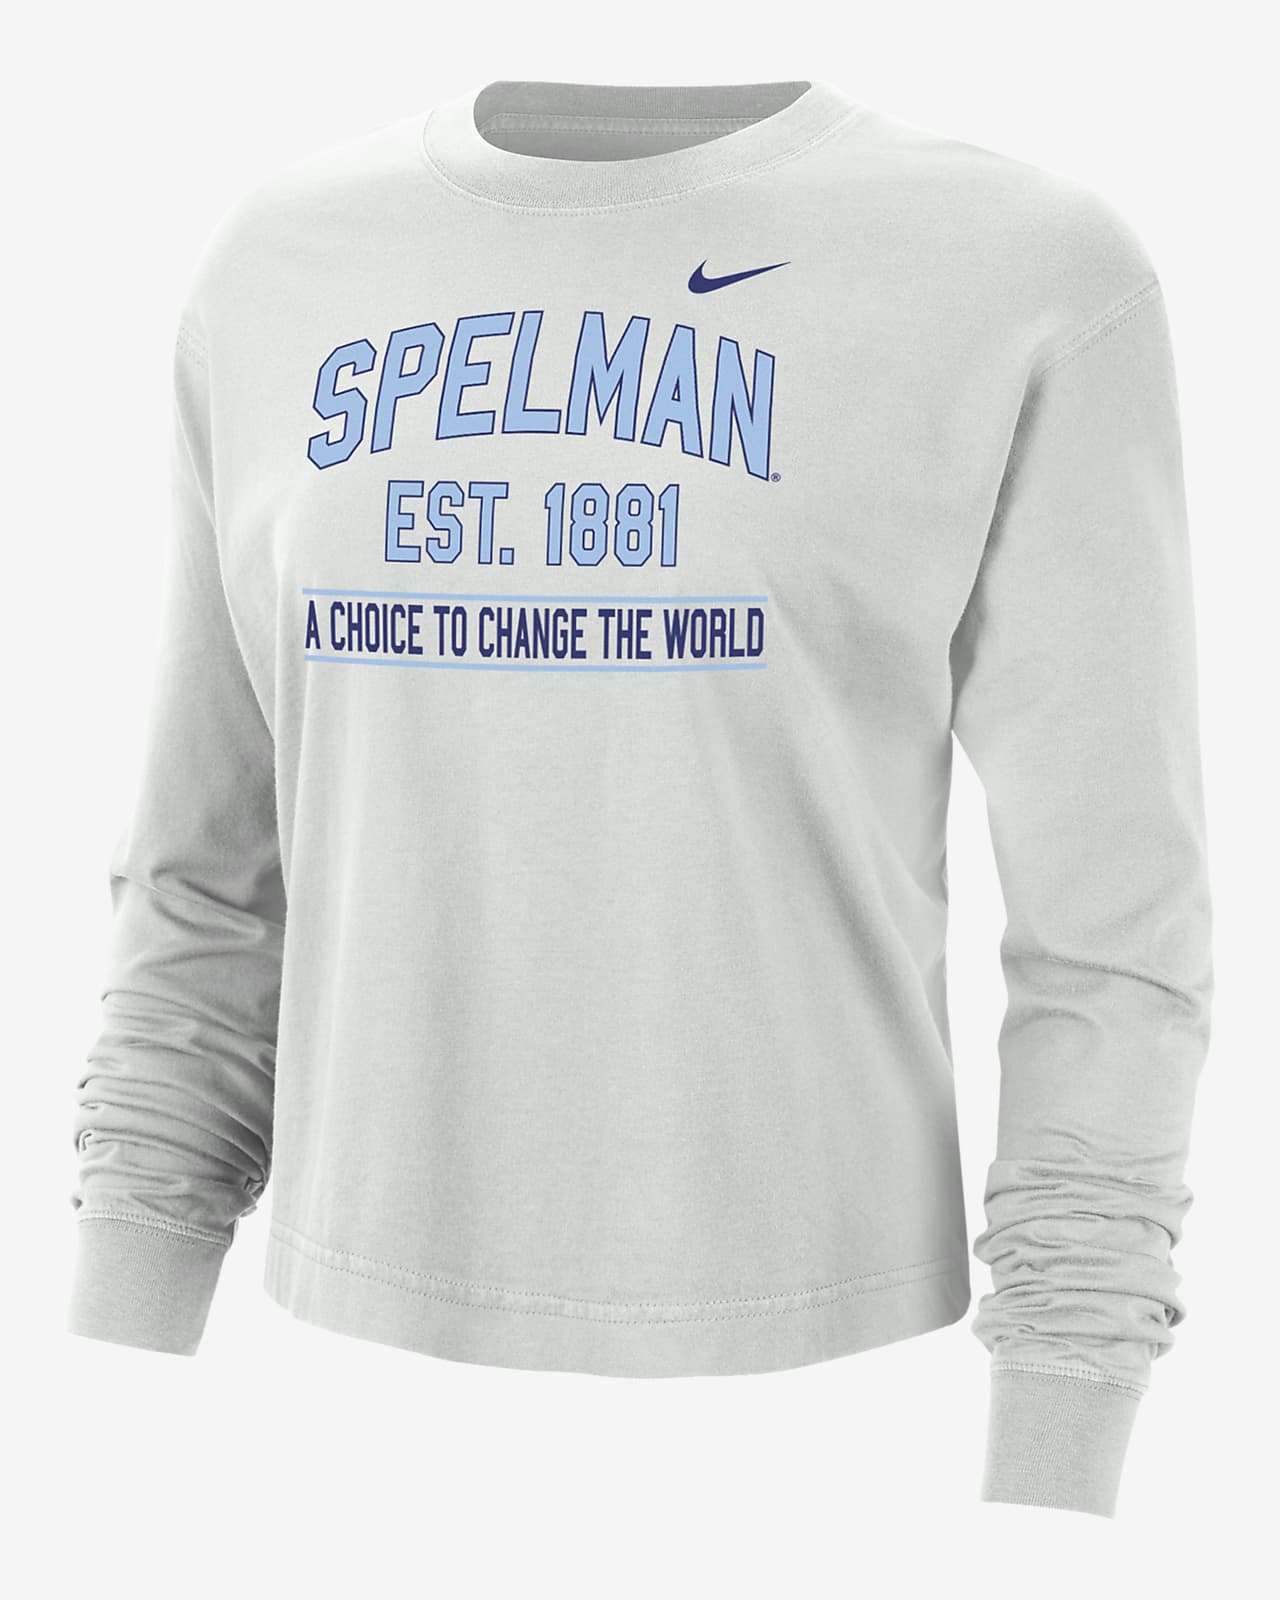 Playera de manga larga universitaria Nike de corte cuadrado para mujer Spelman